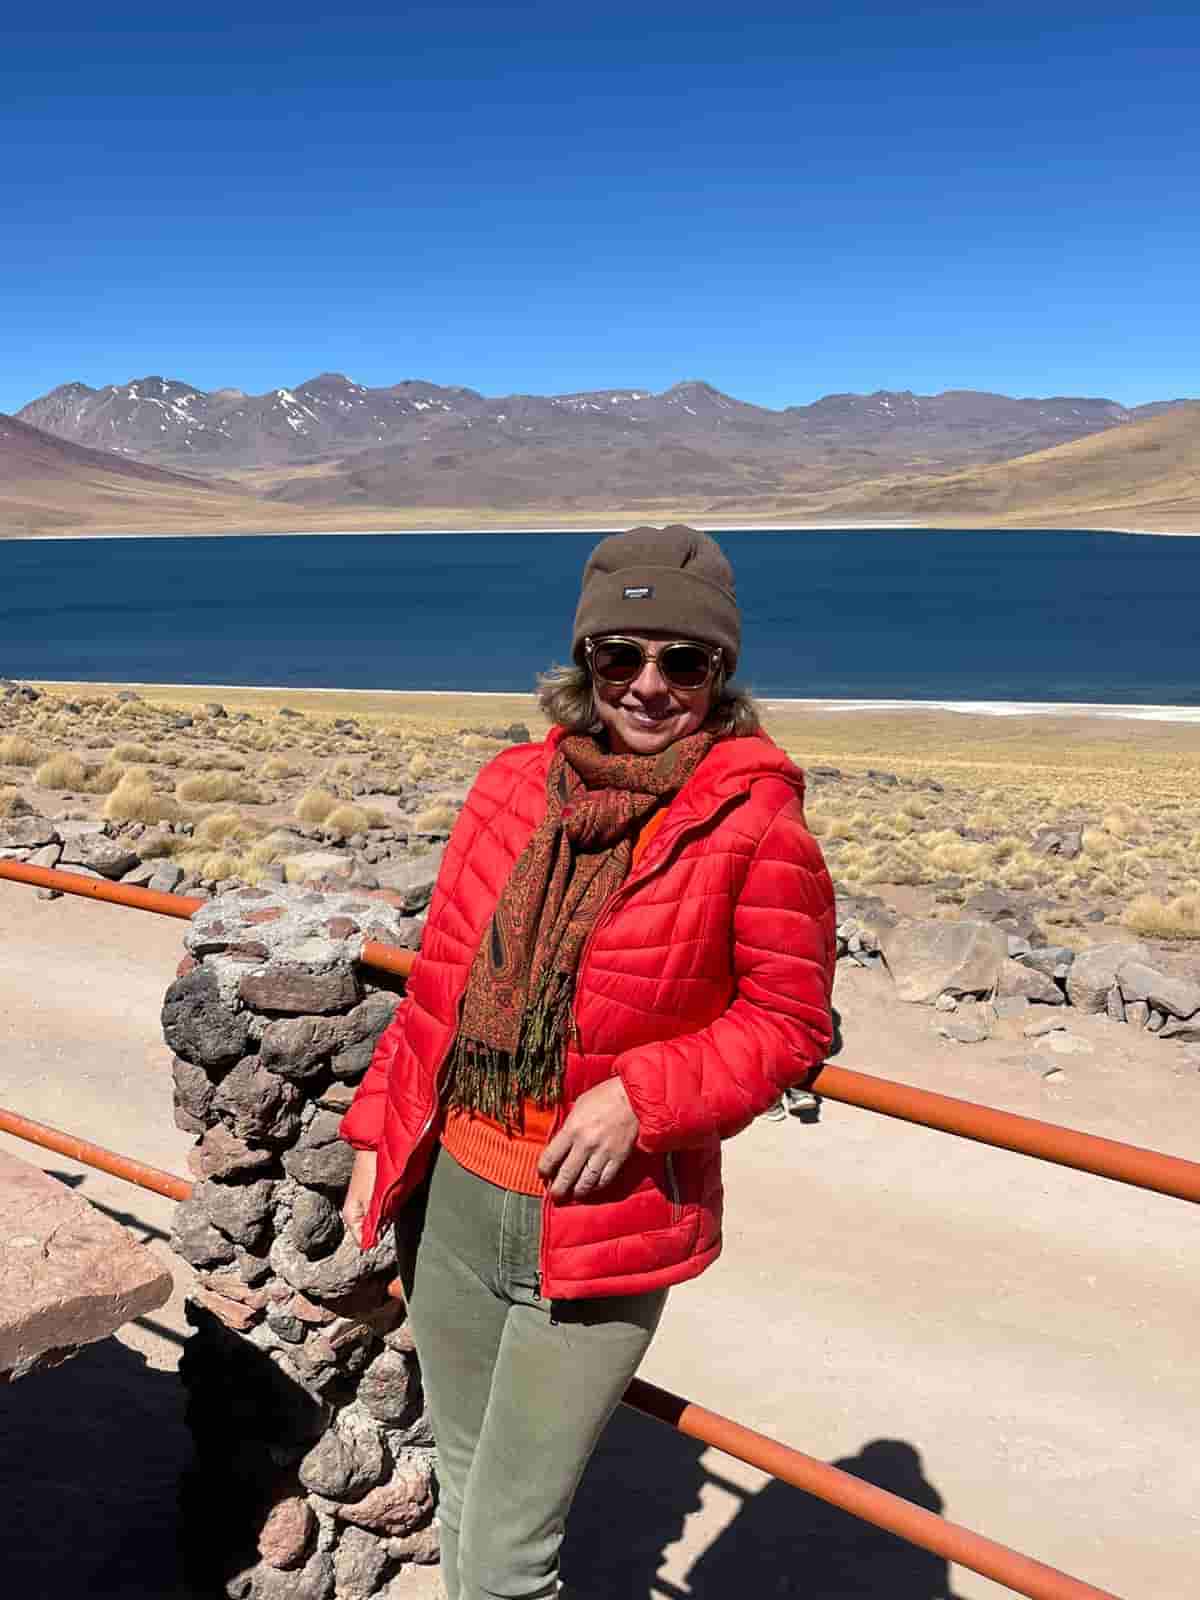 Atacama
